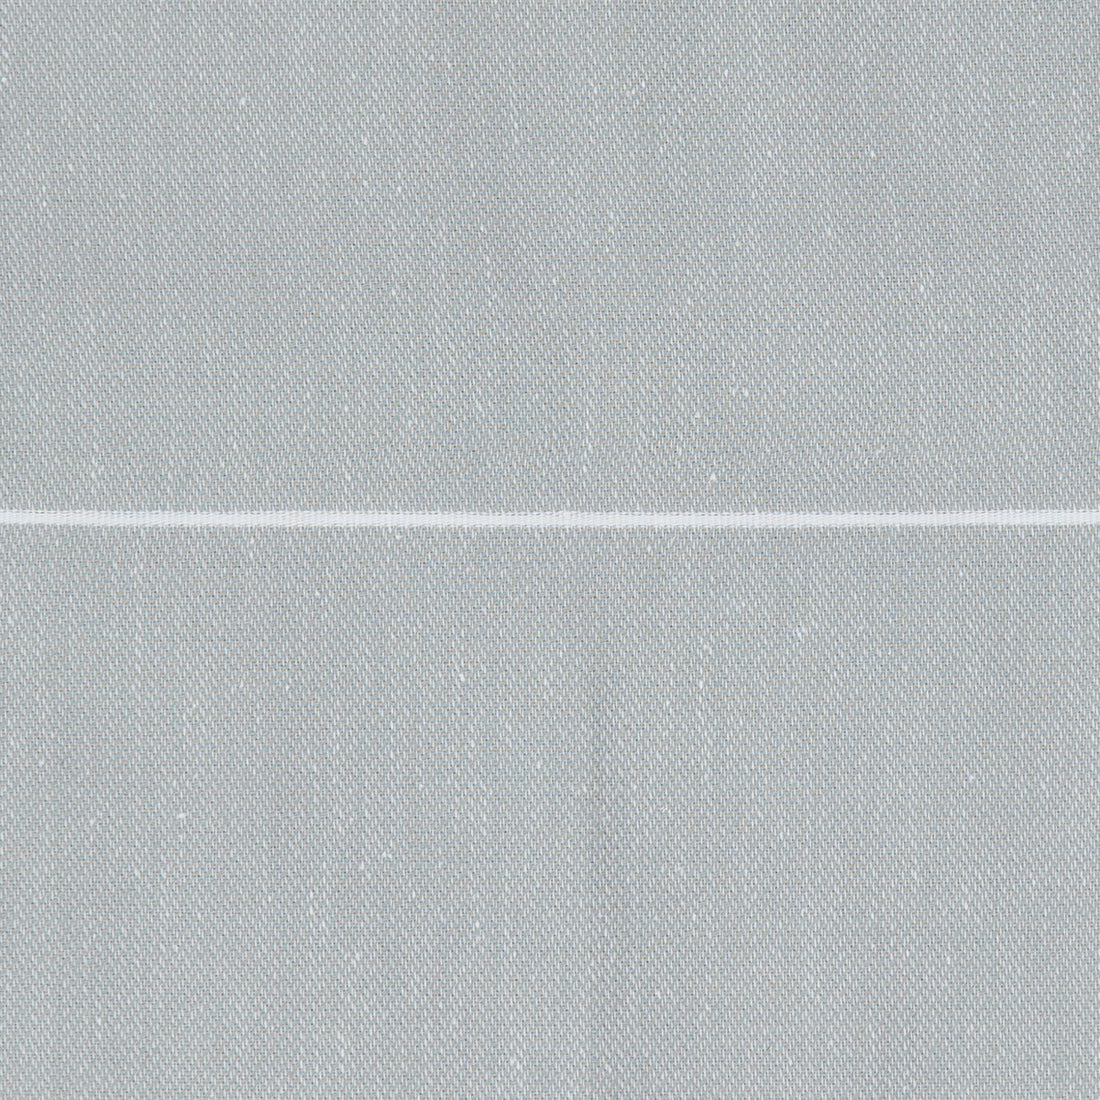 Grey and White Thin Turkish Towel Pattern